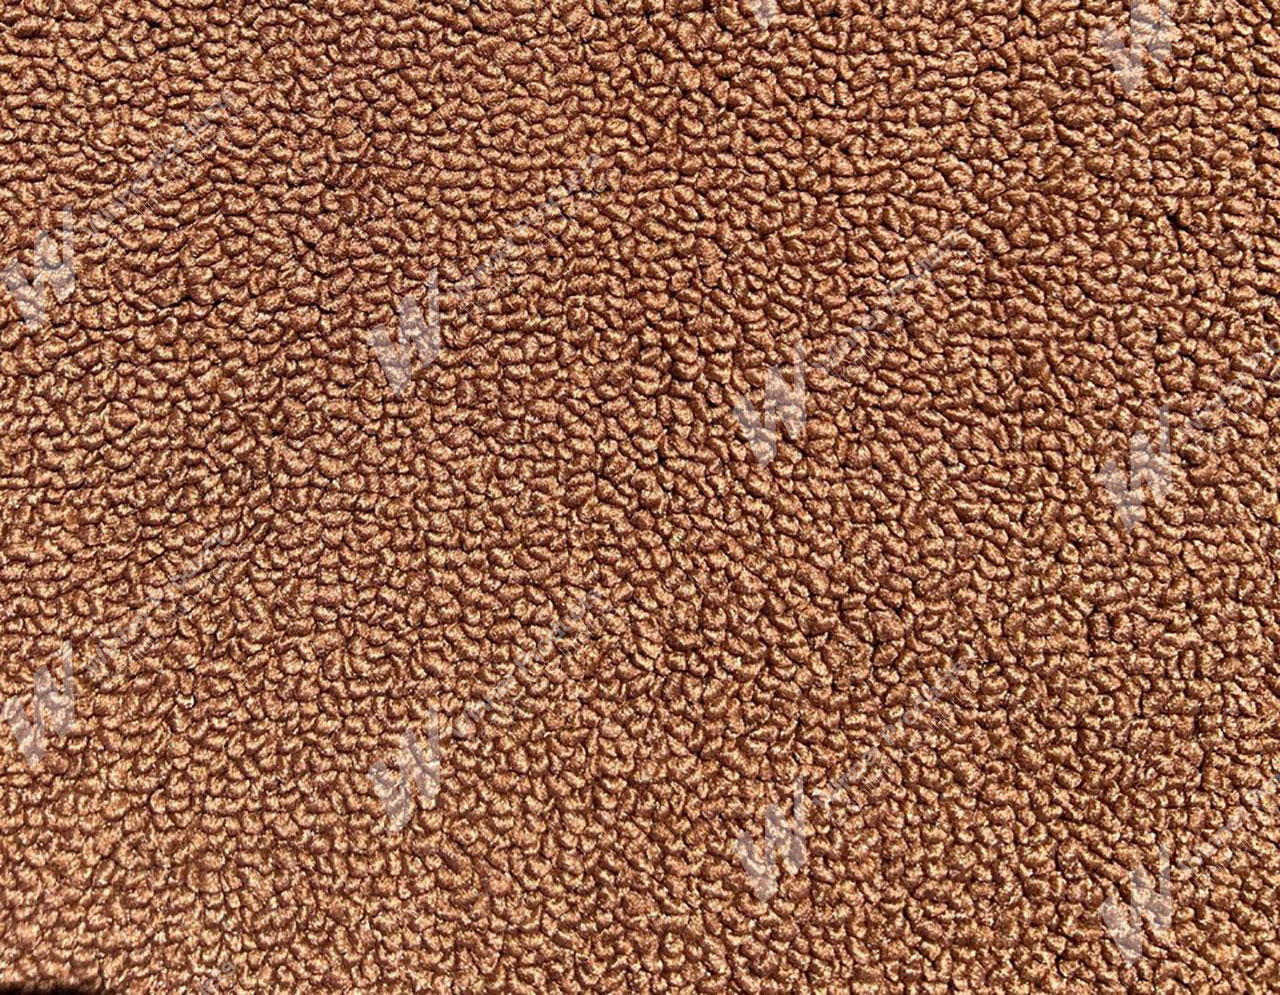 Holden Kingswood HJ Kingswood Wagon 66V Chestnut Carpet (Image 1 of 1)